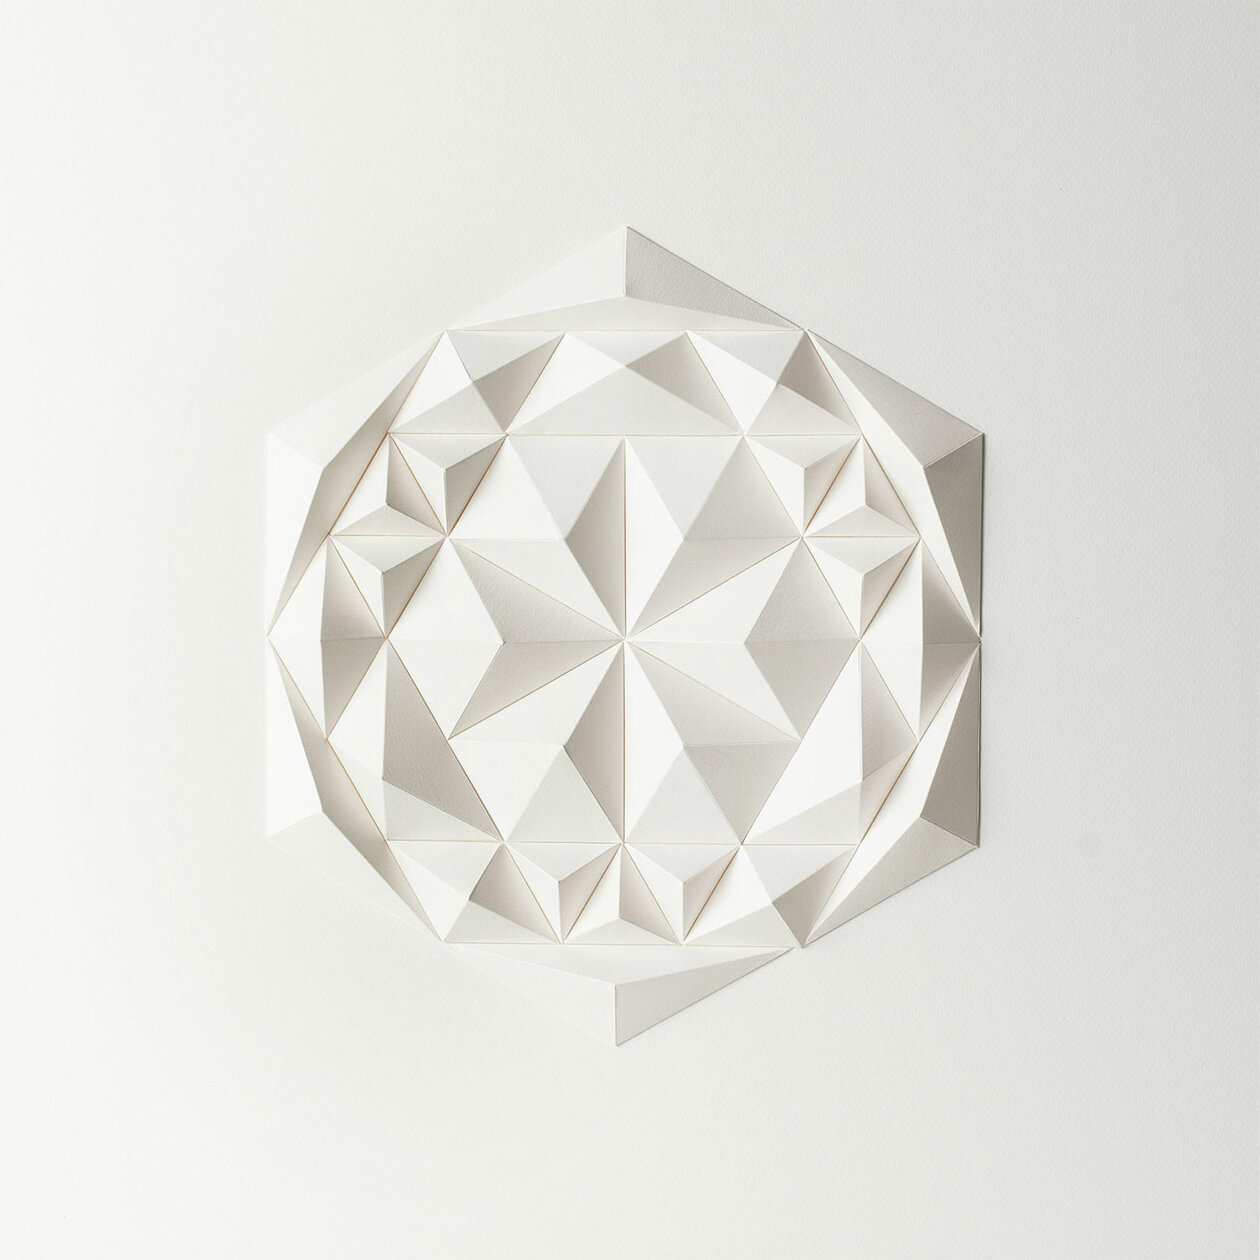 Origami Inspired Geometric Paper Sculptures By Anna Kruhelska (2)